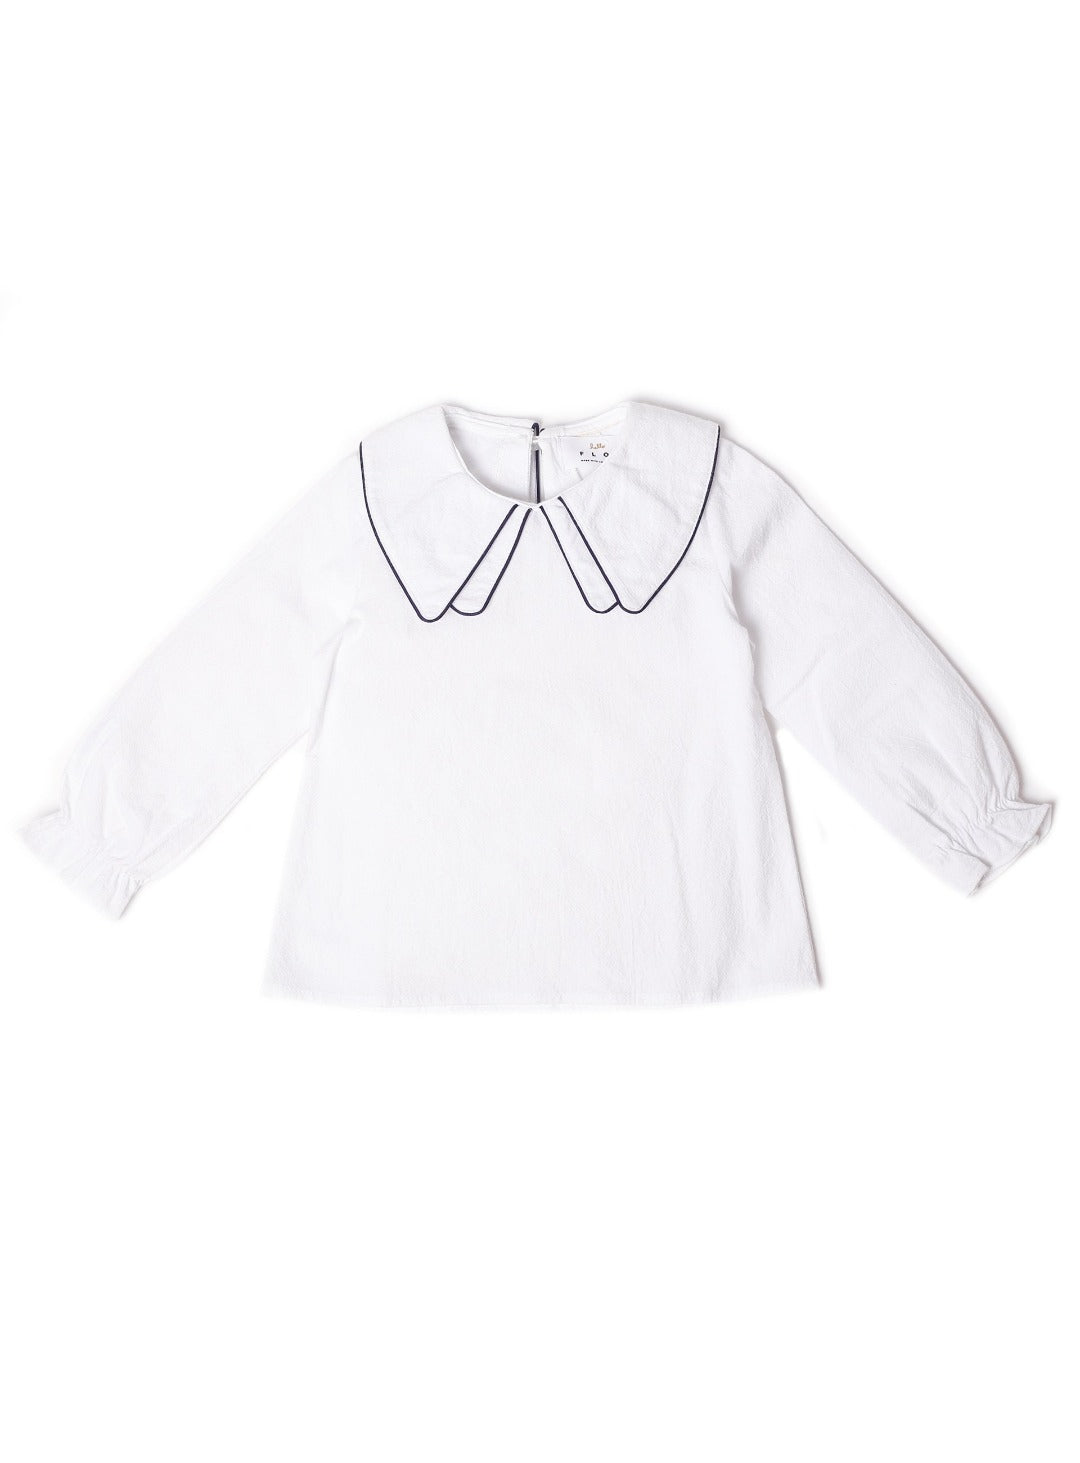 white long sleeve top with puritan collar